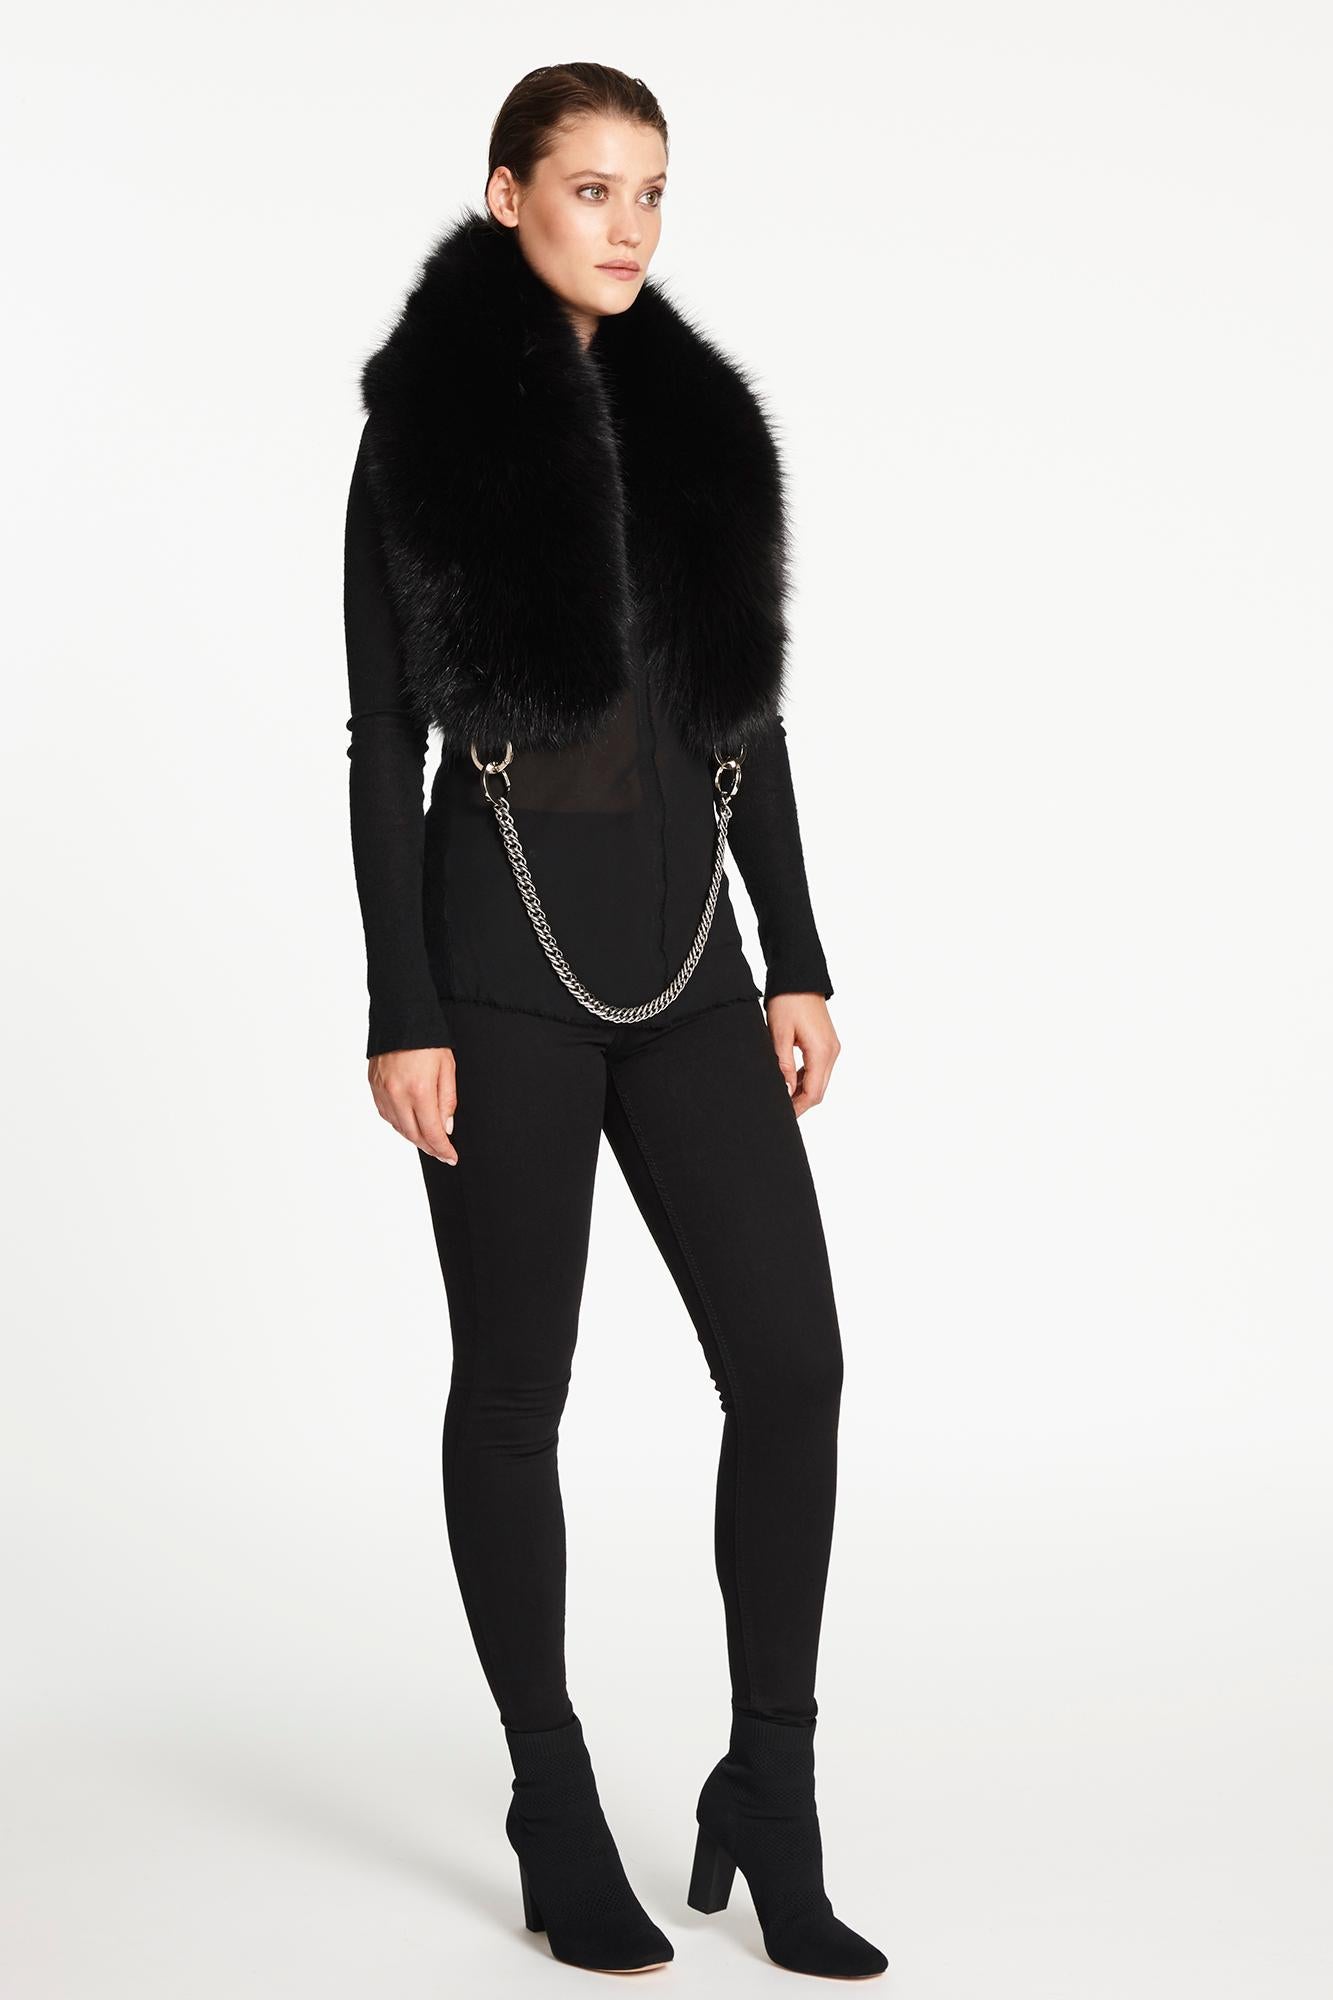 Verheyen London Chained Stole in Black Fox Fur & Silk Lining with Chain - New 2